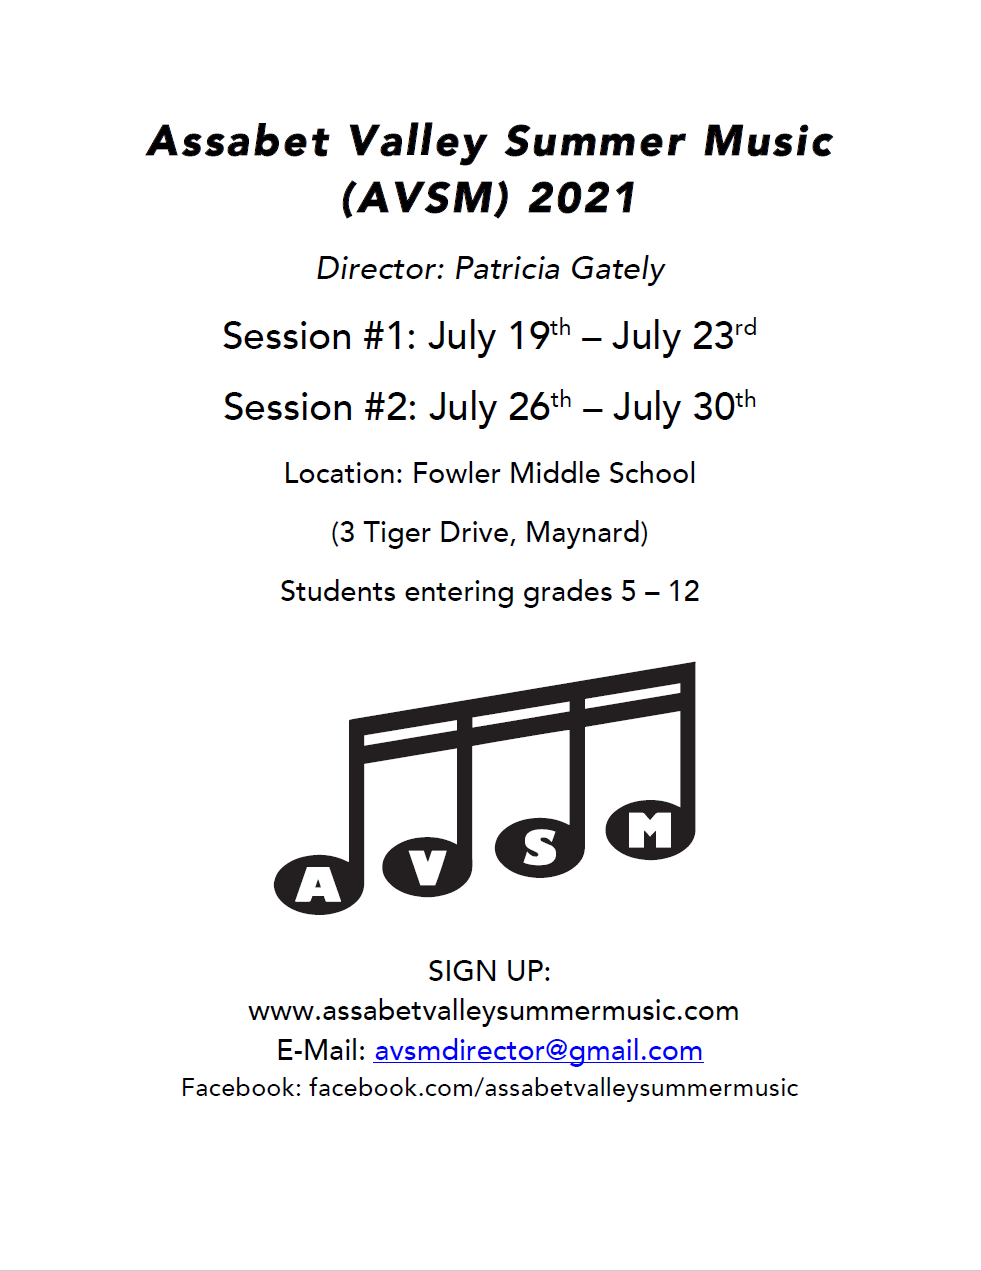 Sign up for the Assabet Valley Summer Music program! Maynard Music